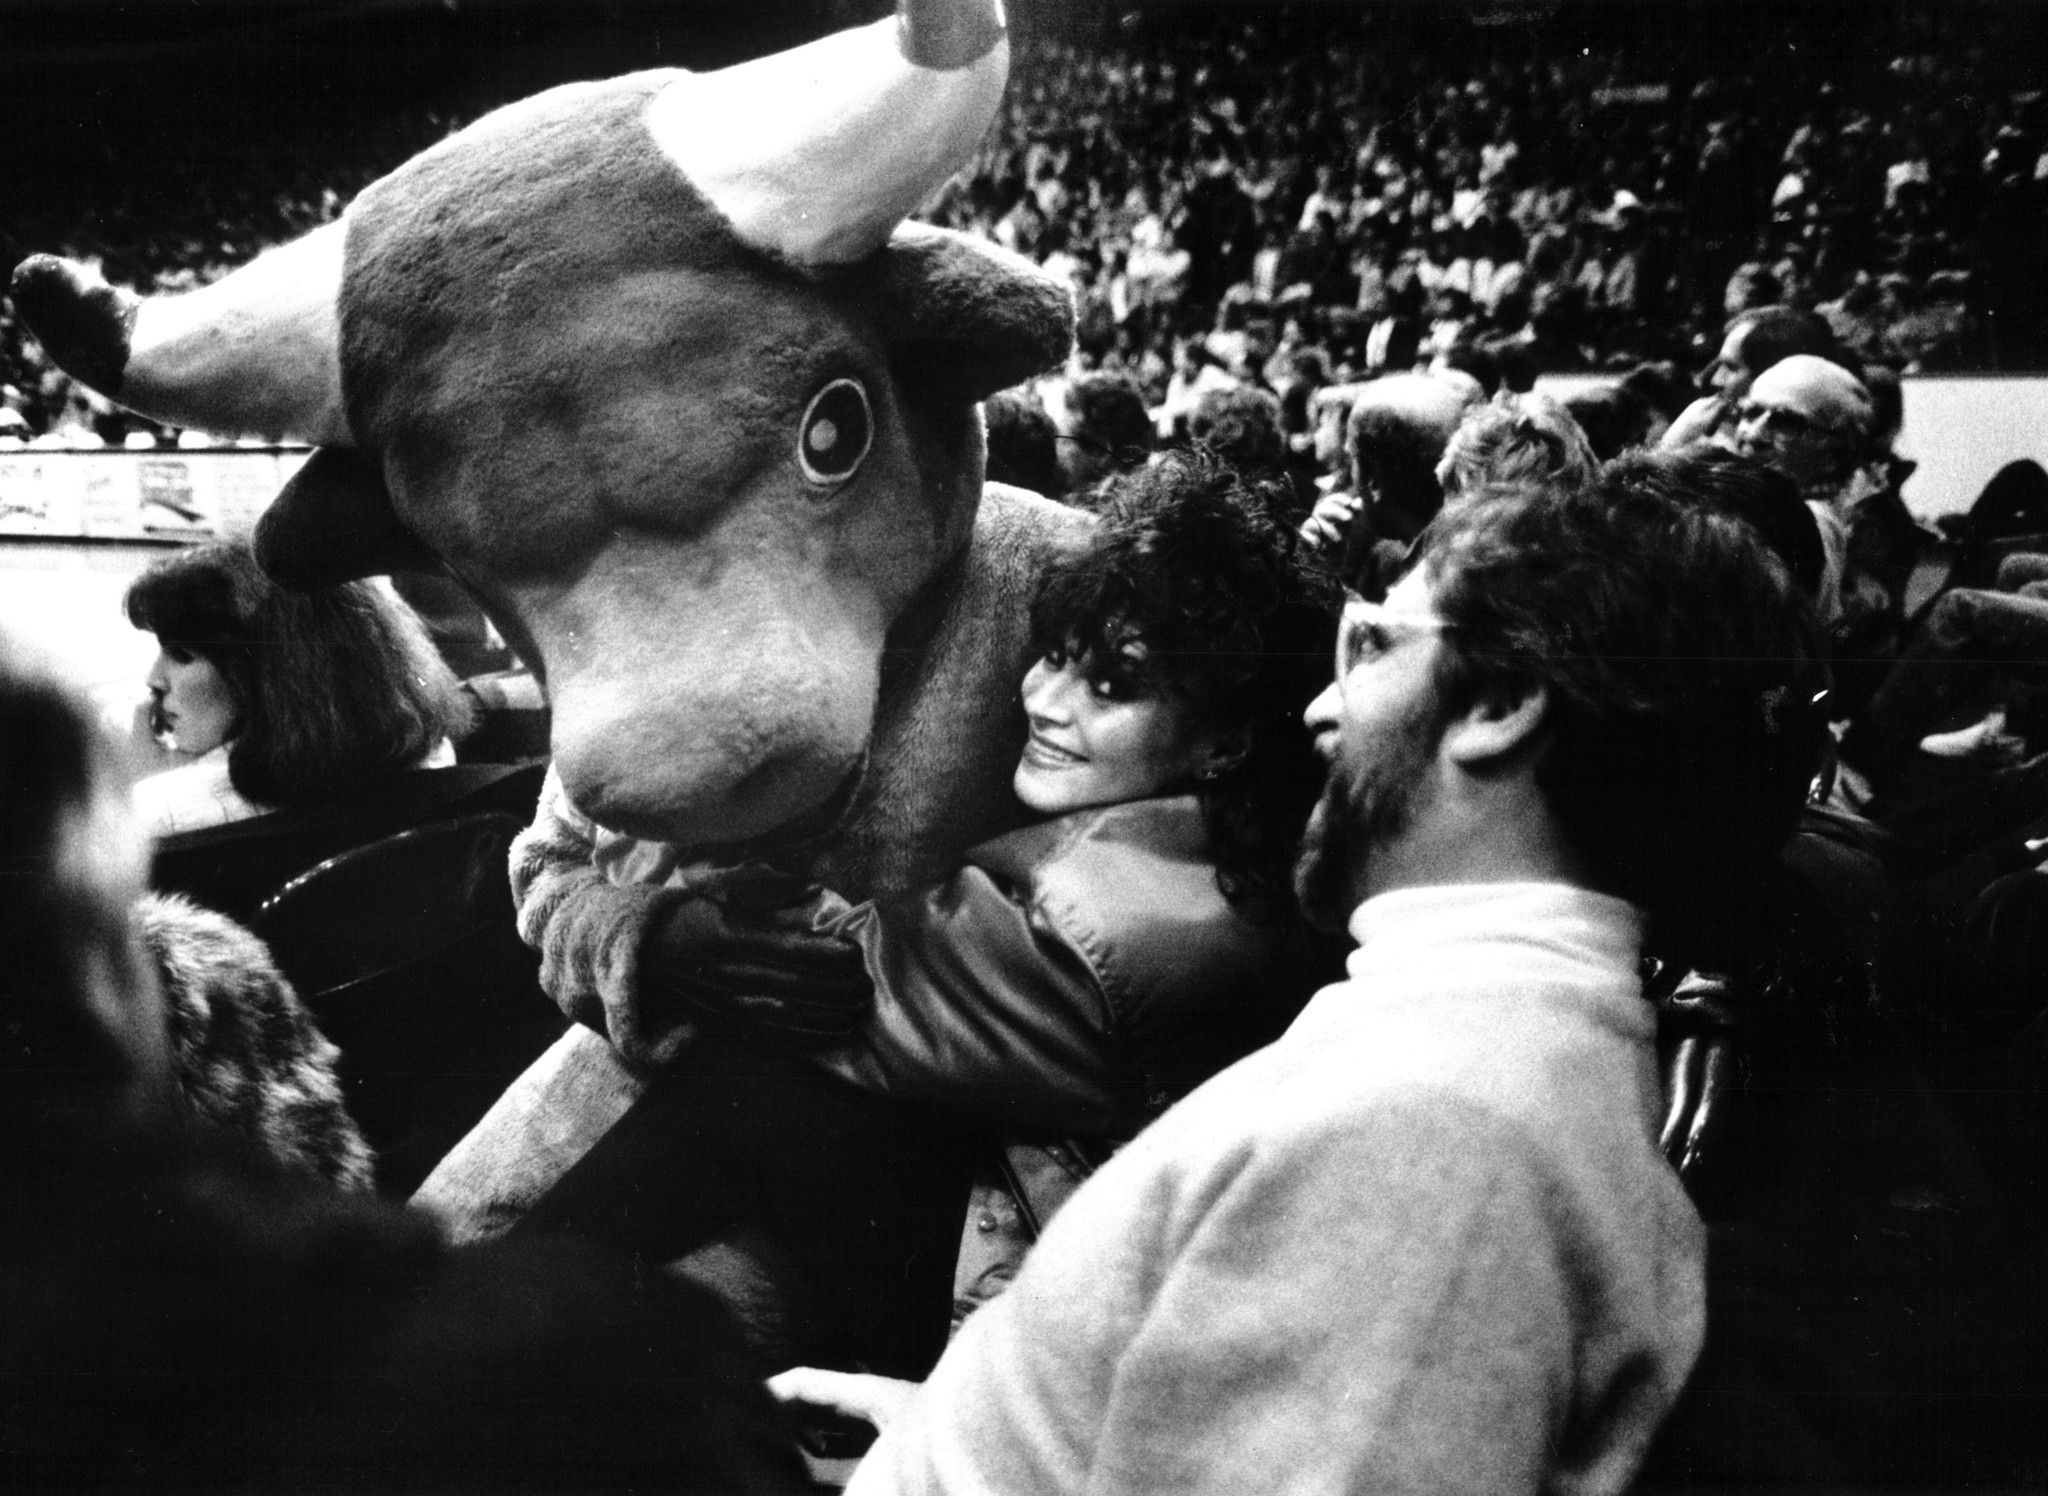 benny the bull 1969